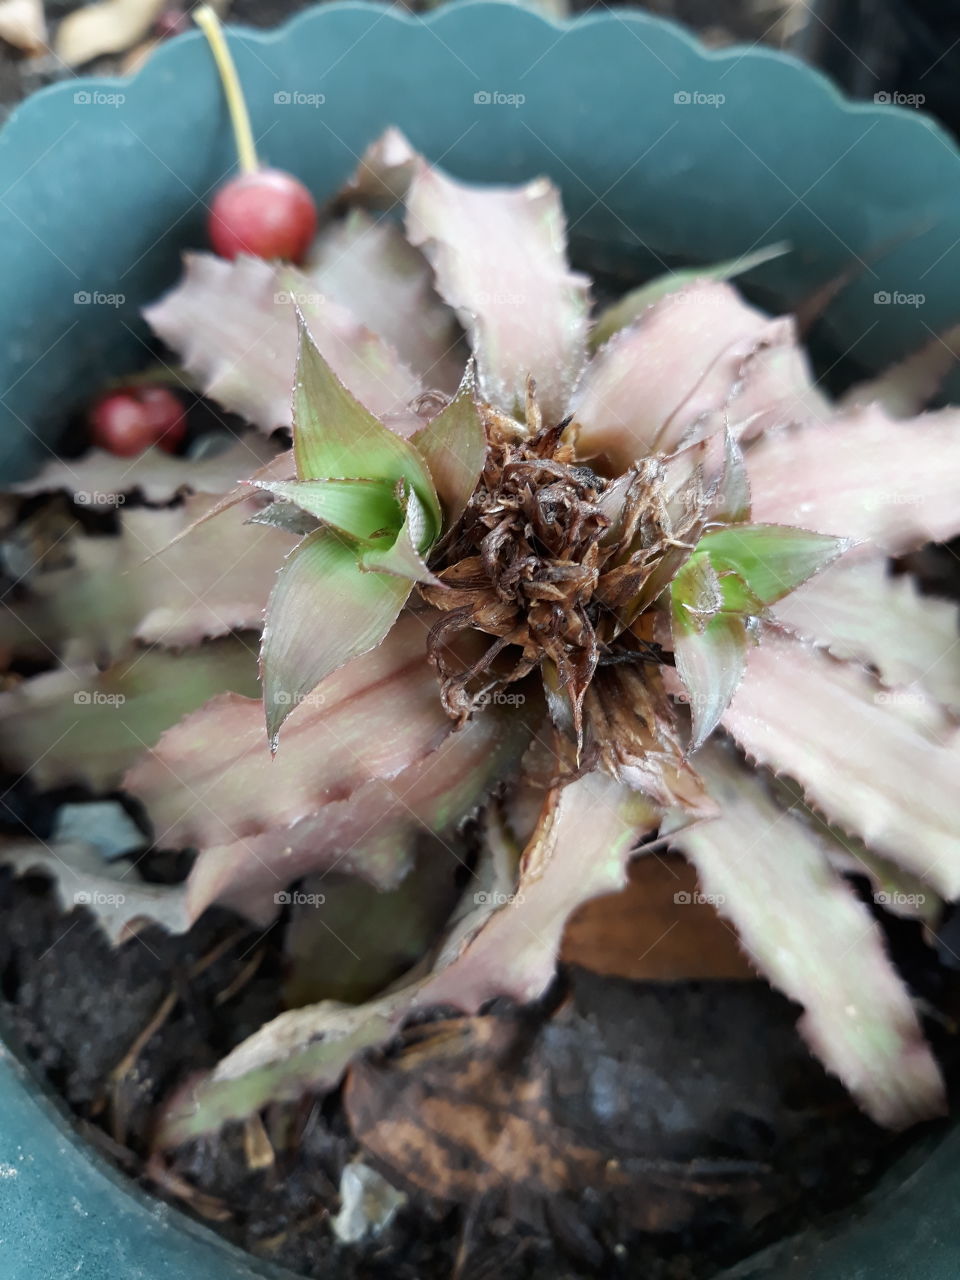 Cristanthus babies